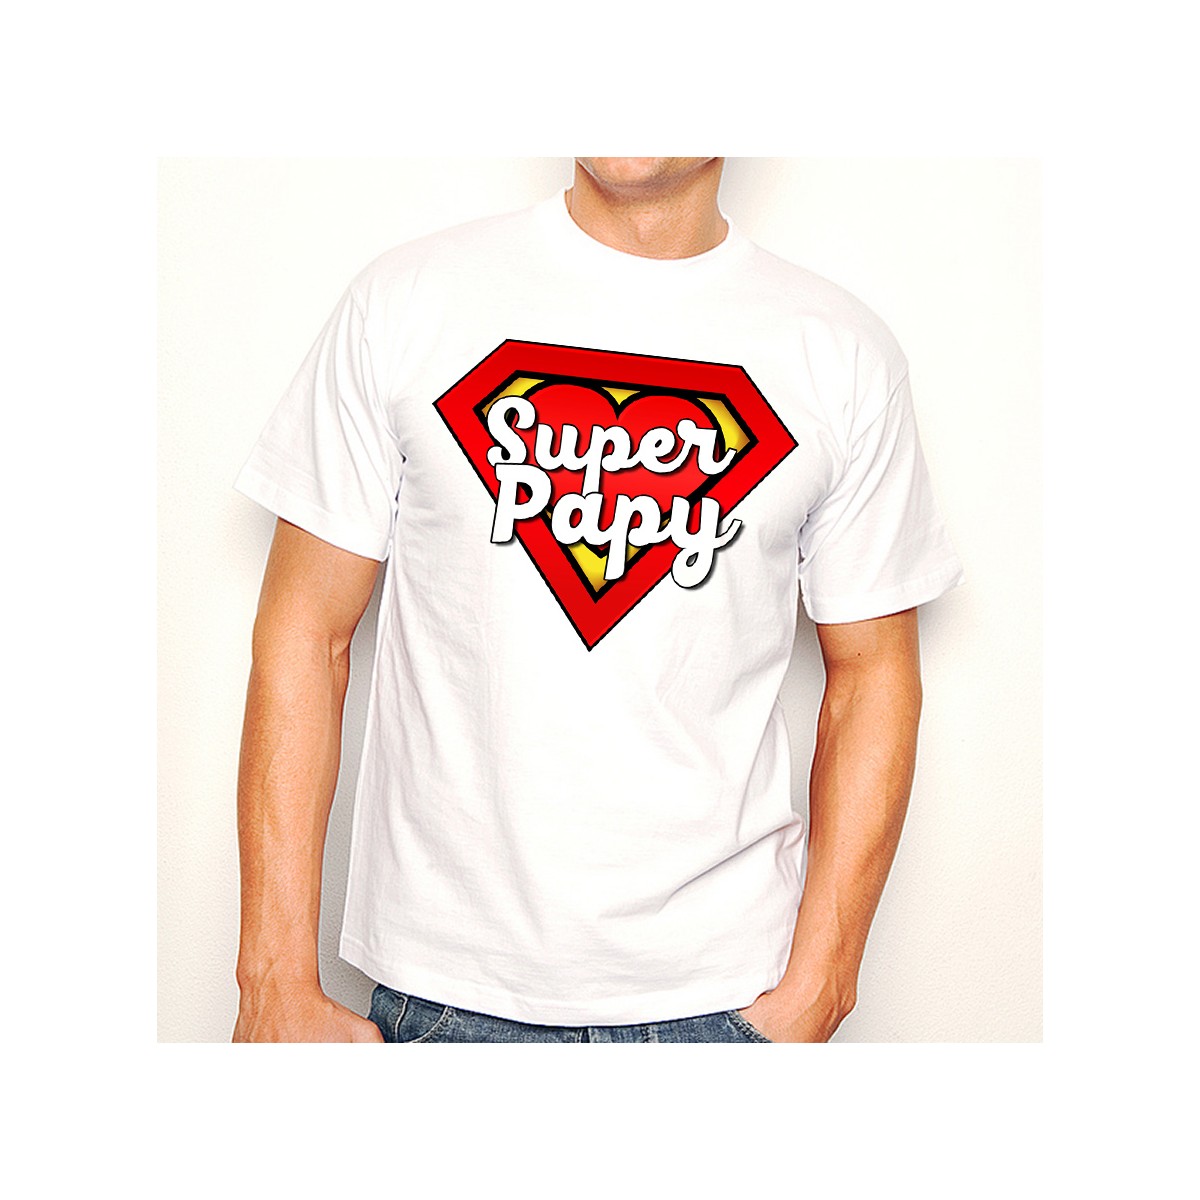 T-shirt Super papy